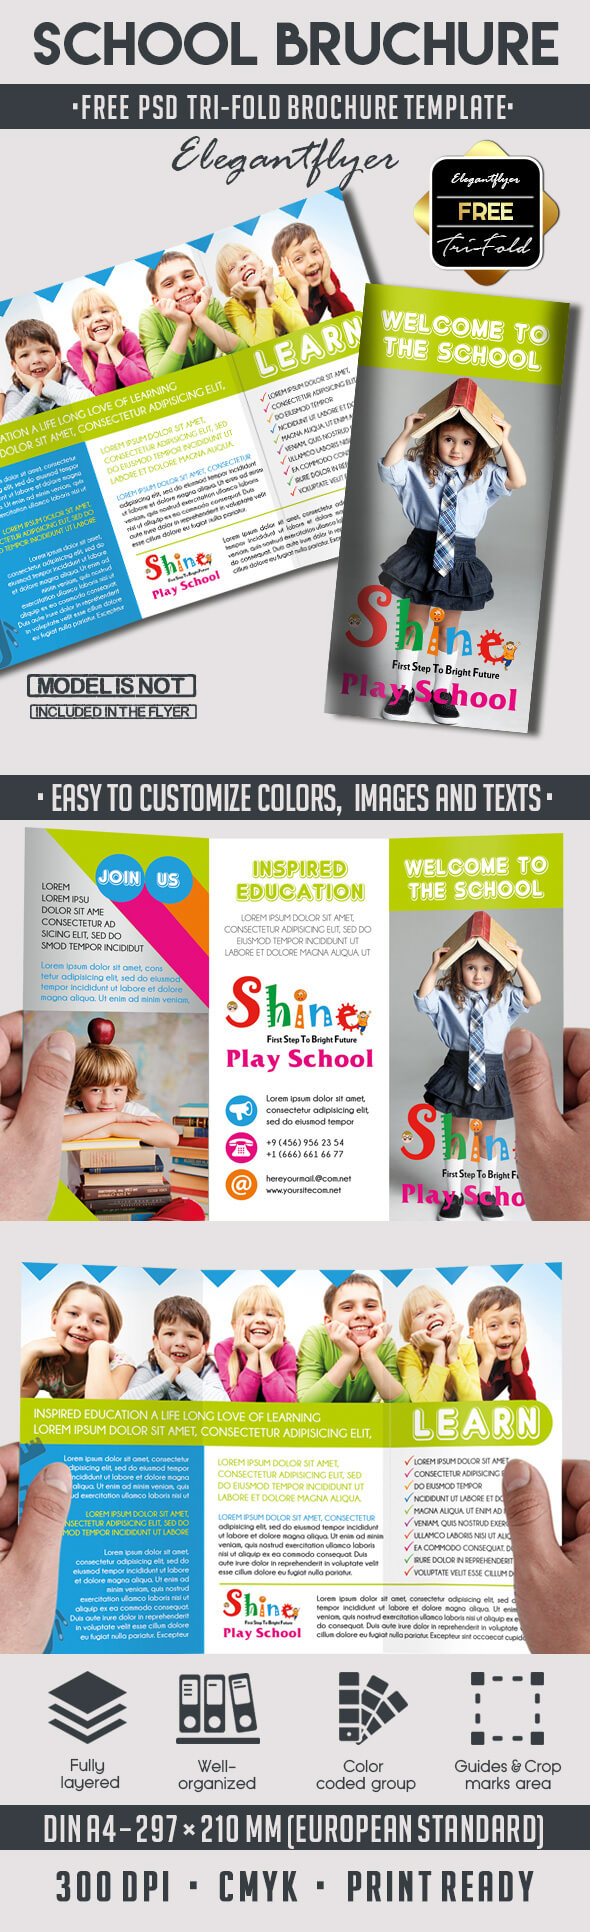 School – Free Psd Tri Fold Psd Brochure Template On Behance Inside Play School Brochure Templates